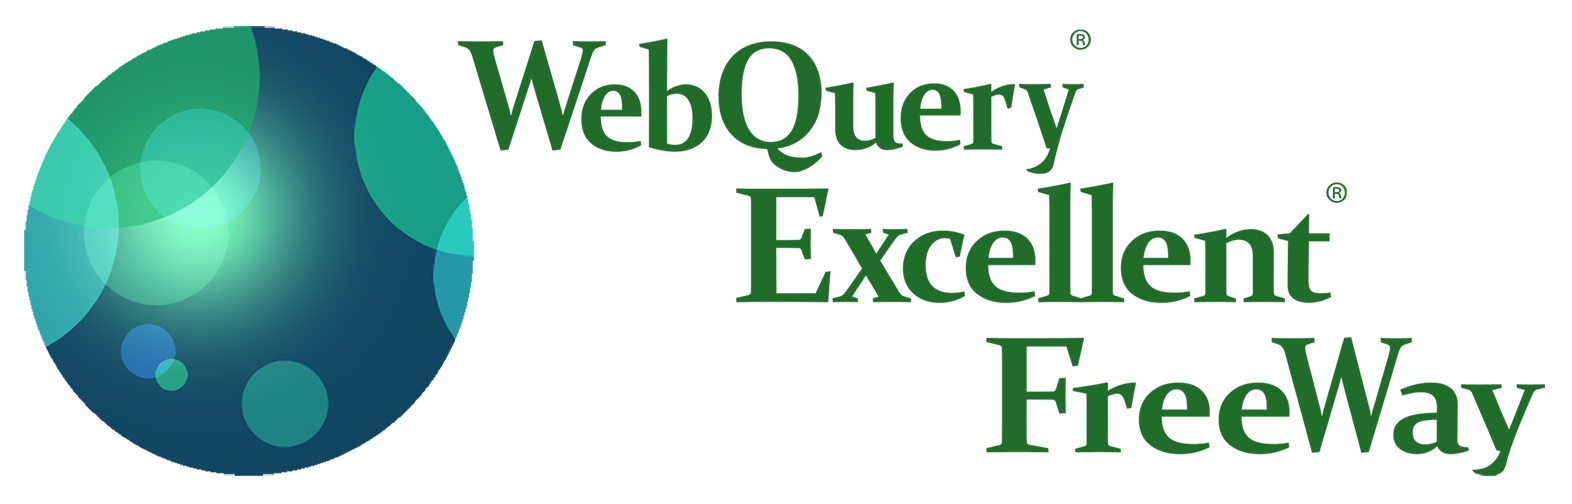 WebQuery/Excellent/FreeWay